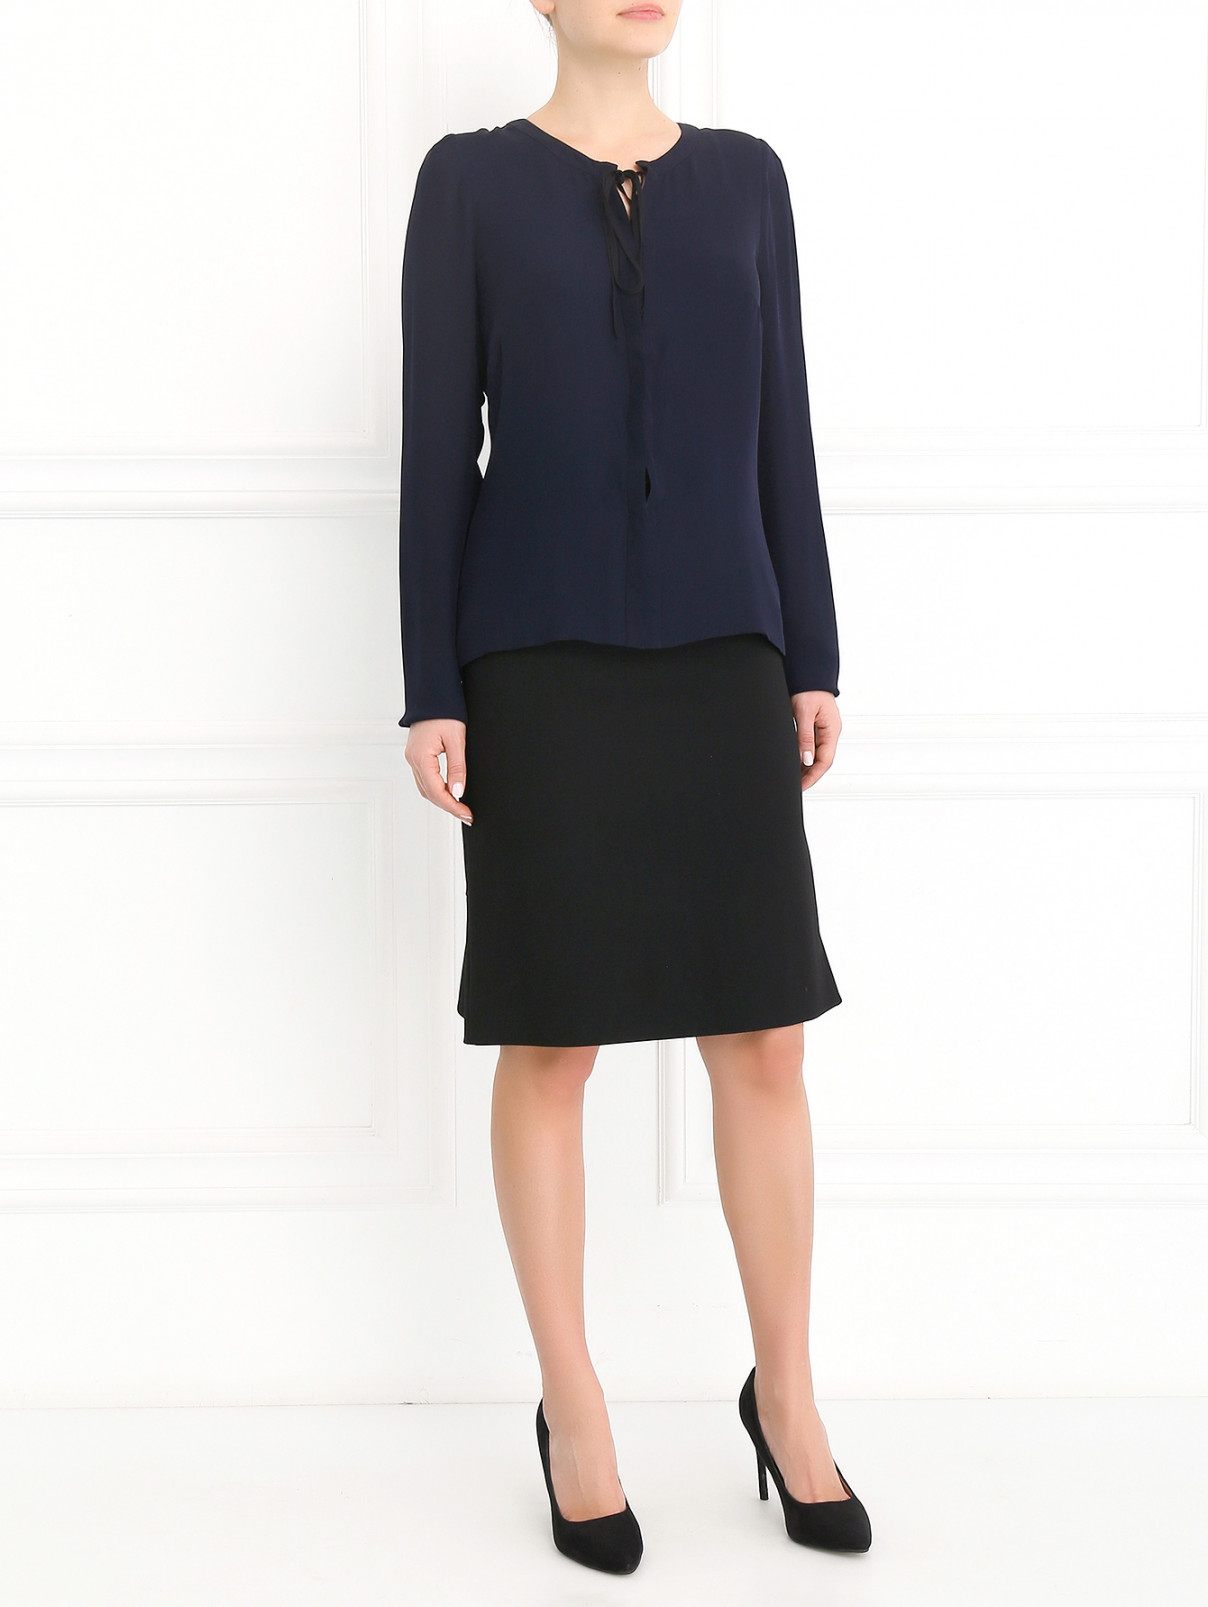 Блуза из шелка Barbara Bui  –  Модель Общий вид  – Цвет:  Синий